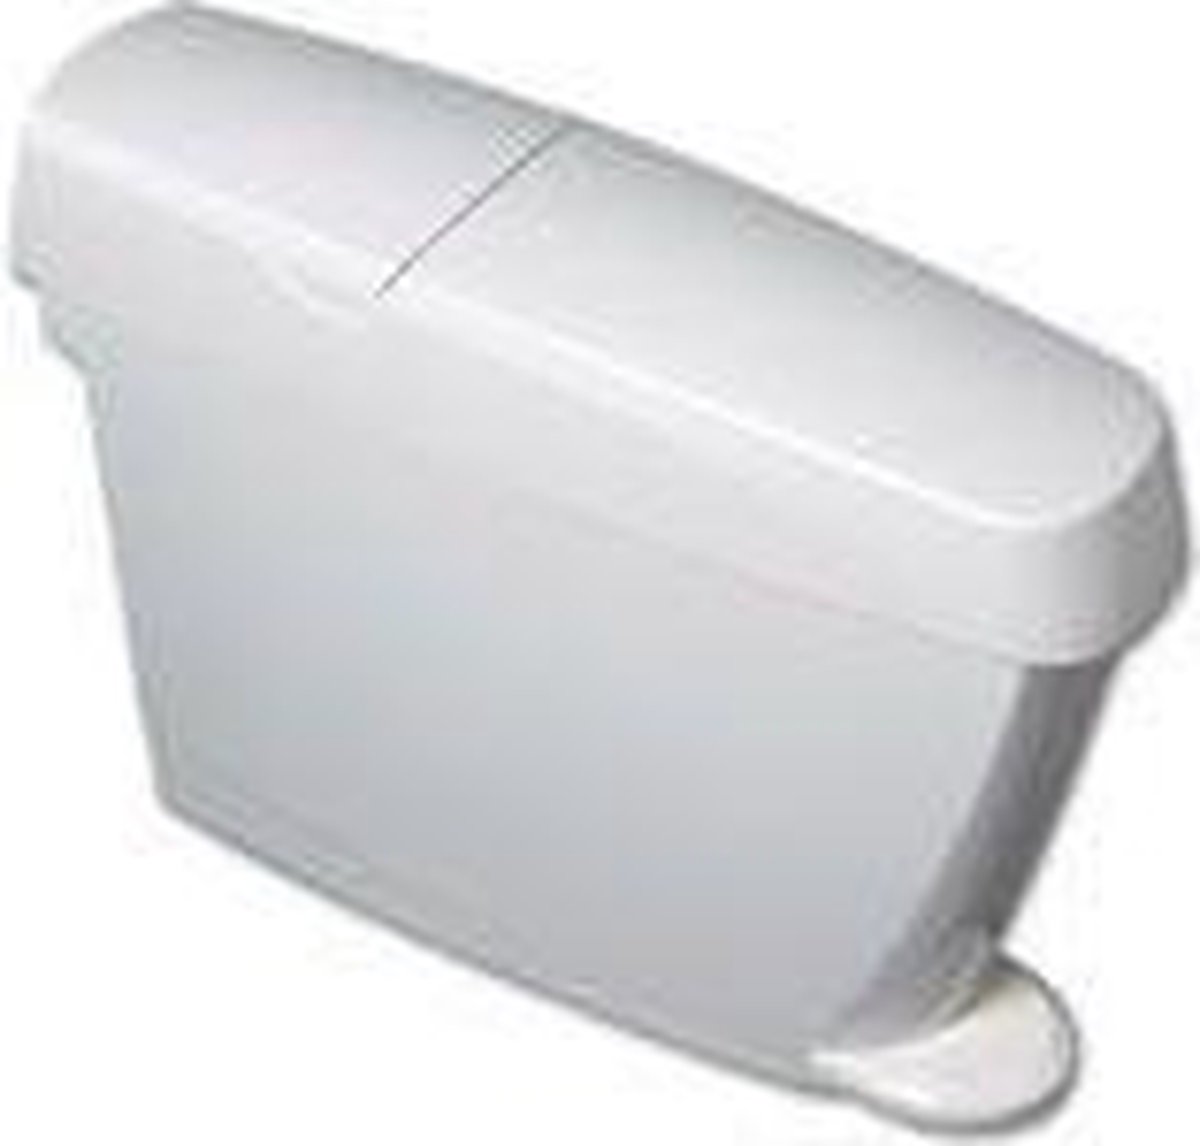 Feminine hygiene bins - Sanibin 15 liter - Space-saving capacity